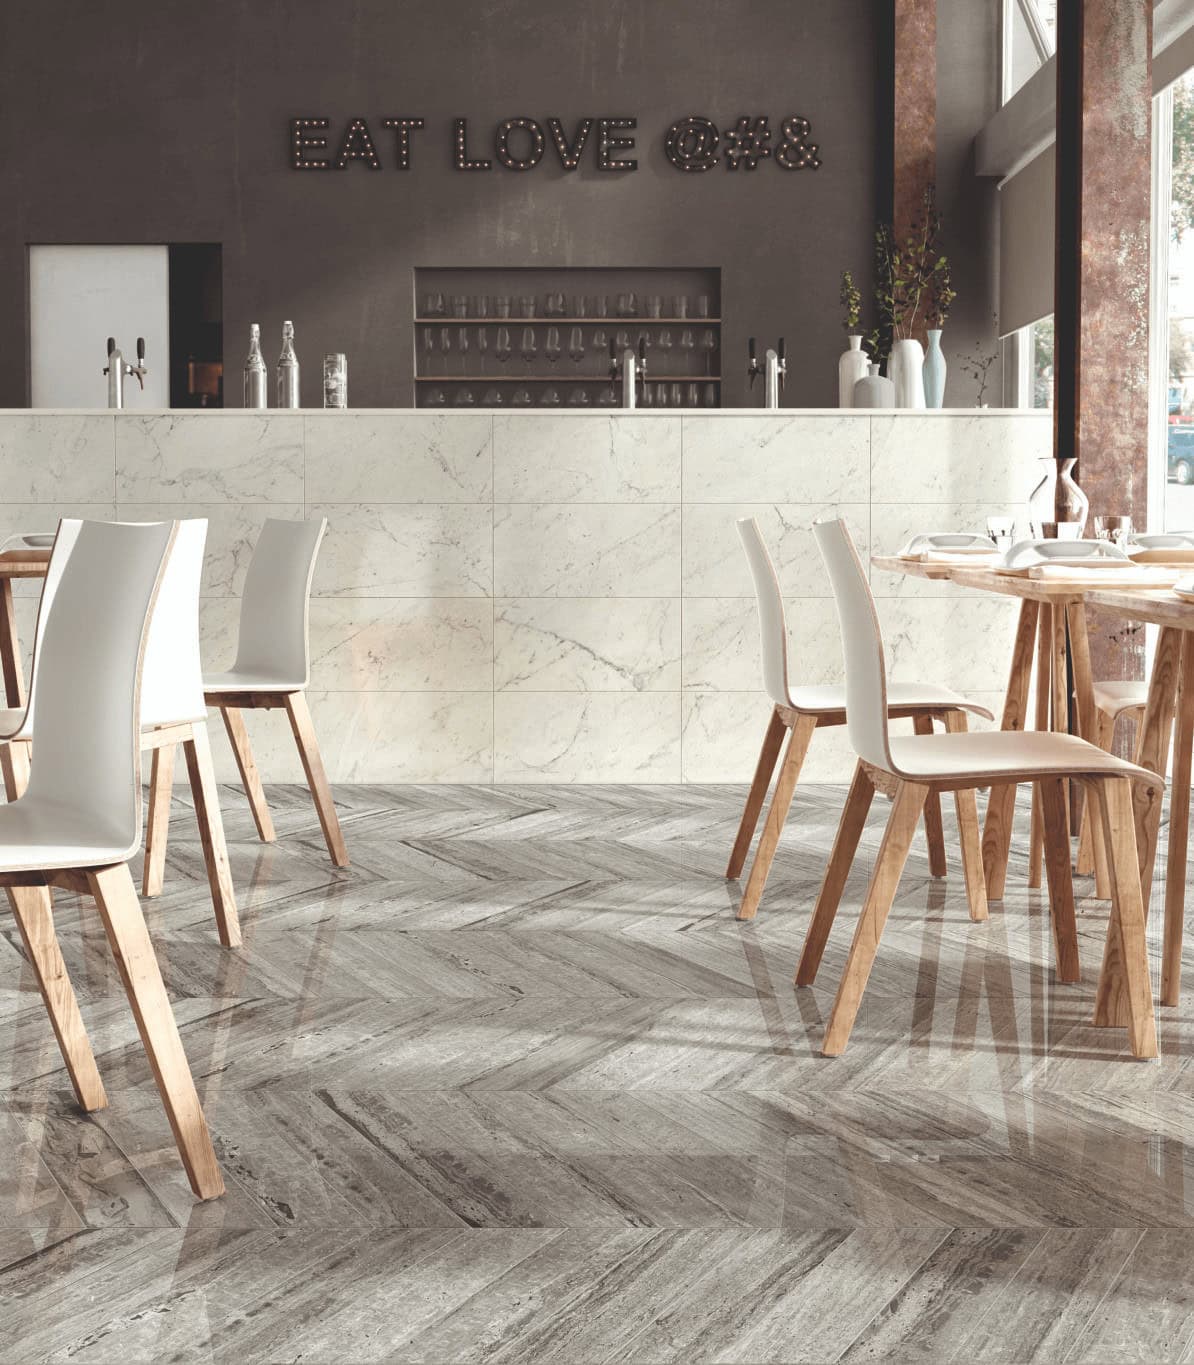 Wood-look chevron tile flooring in a restaurant